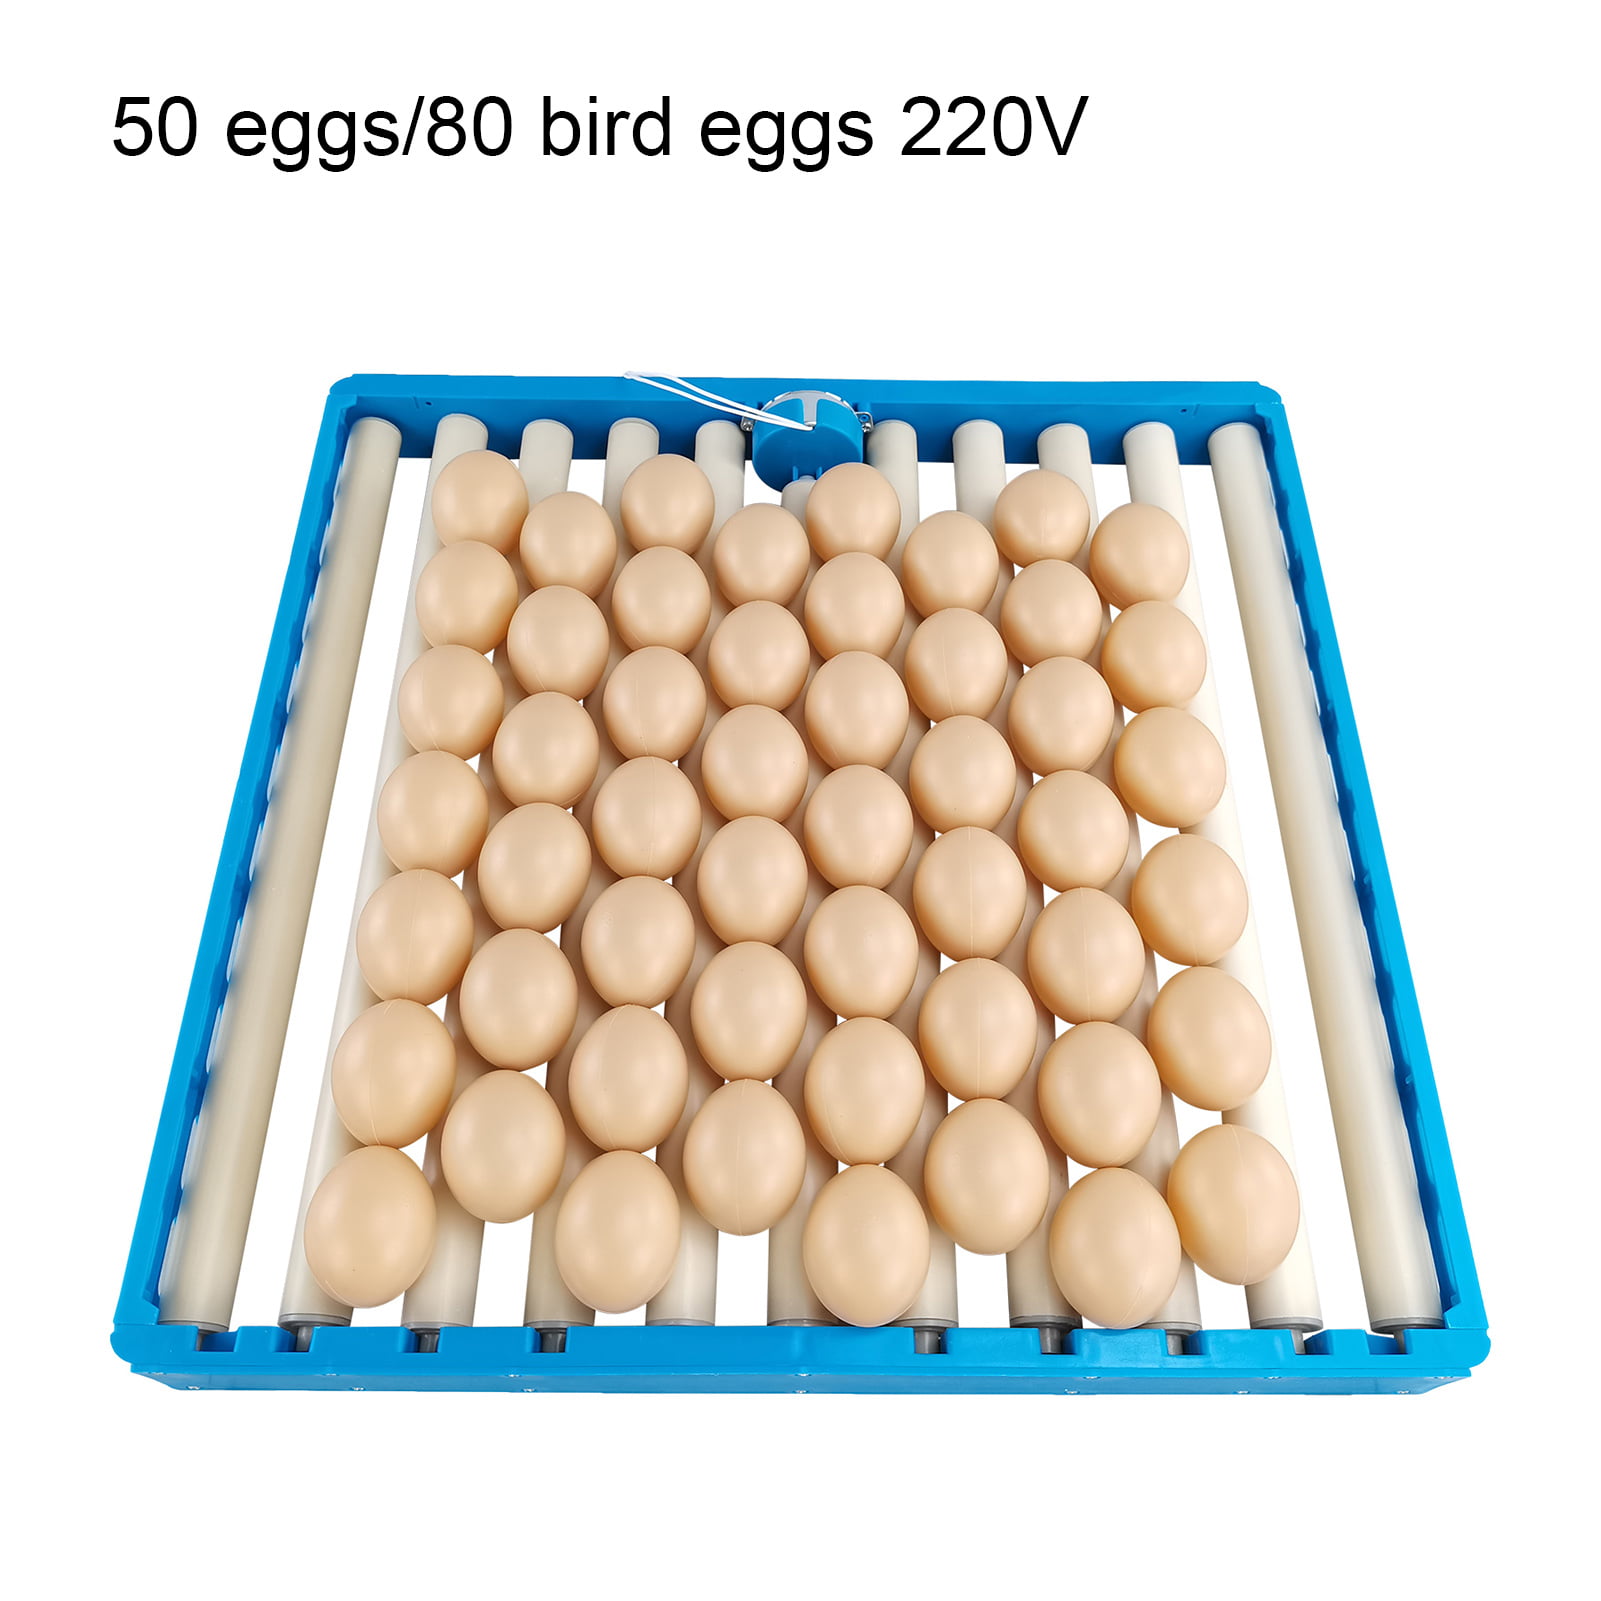 Easy to Clean Chicken Egg Setter Tray 80 EggsDurable 